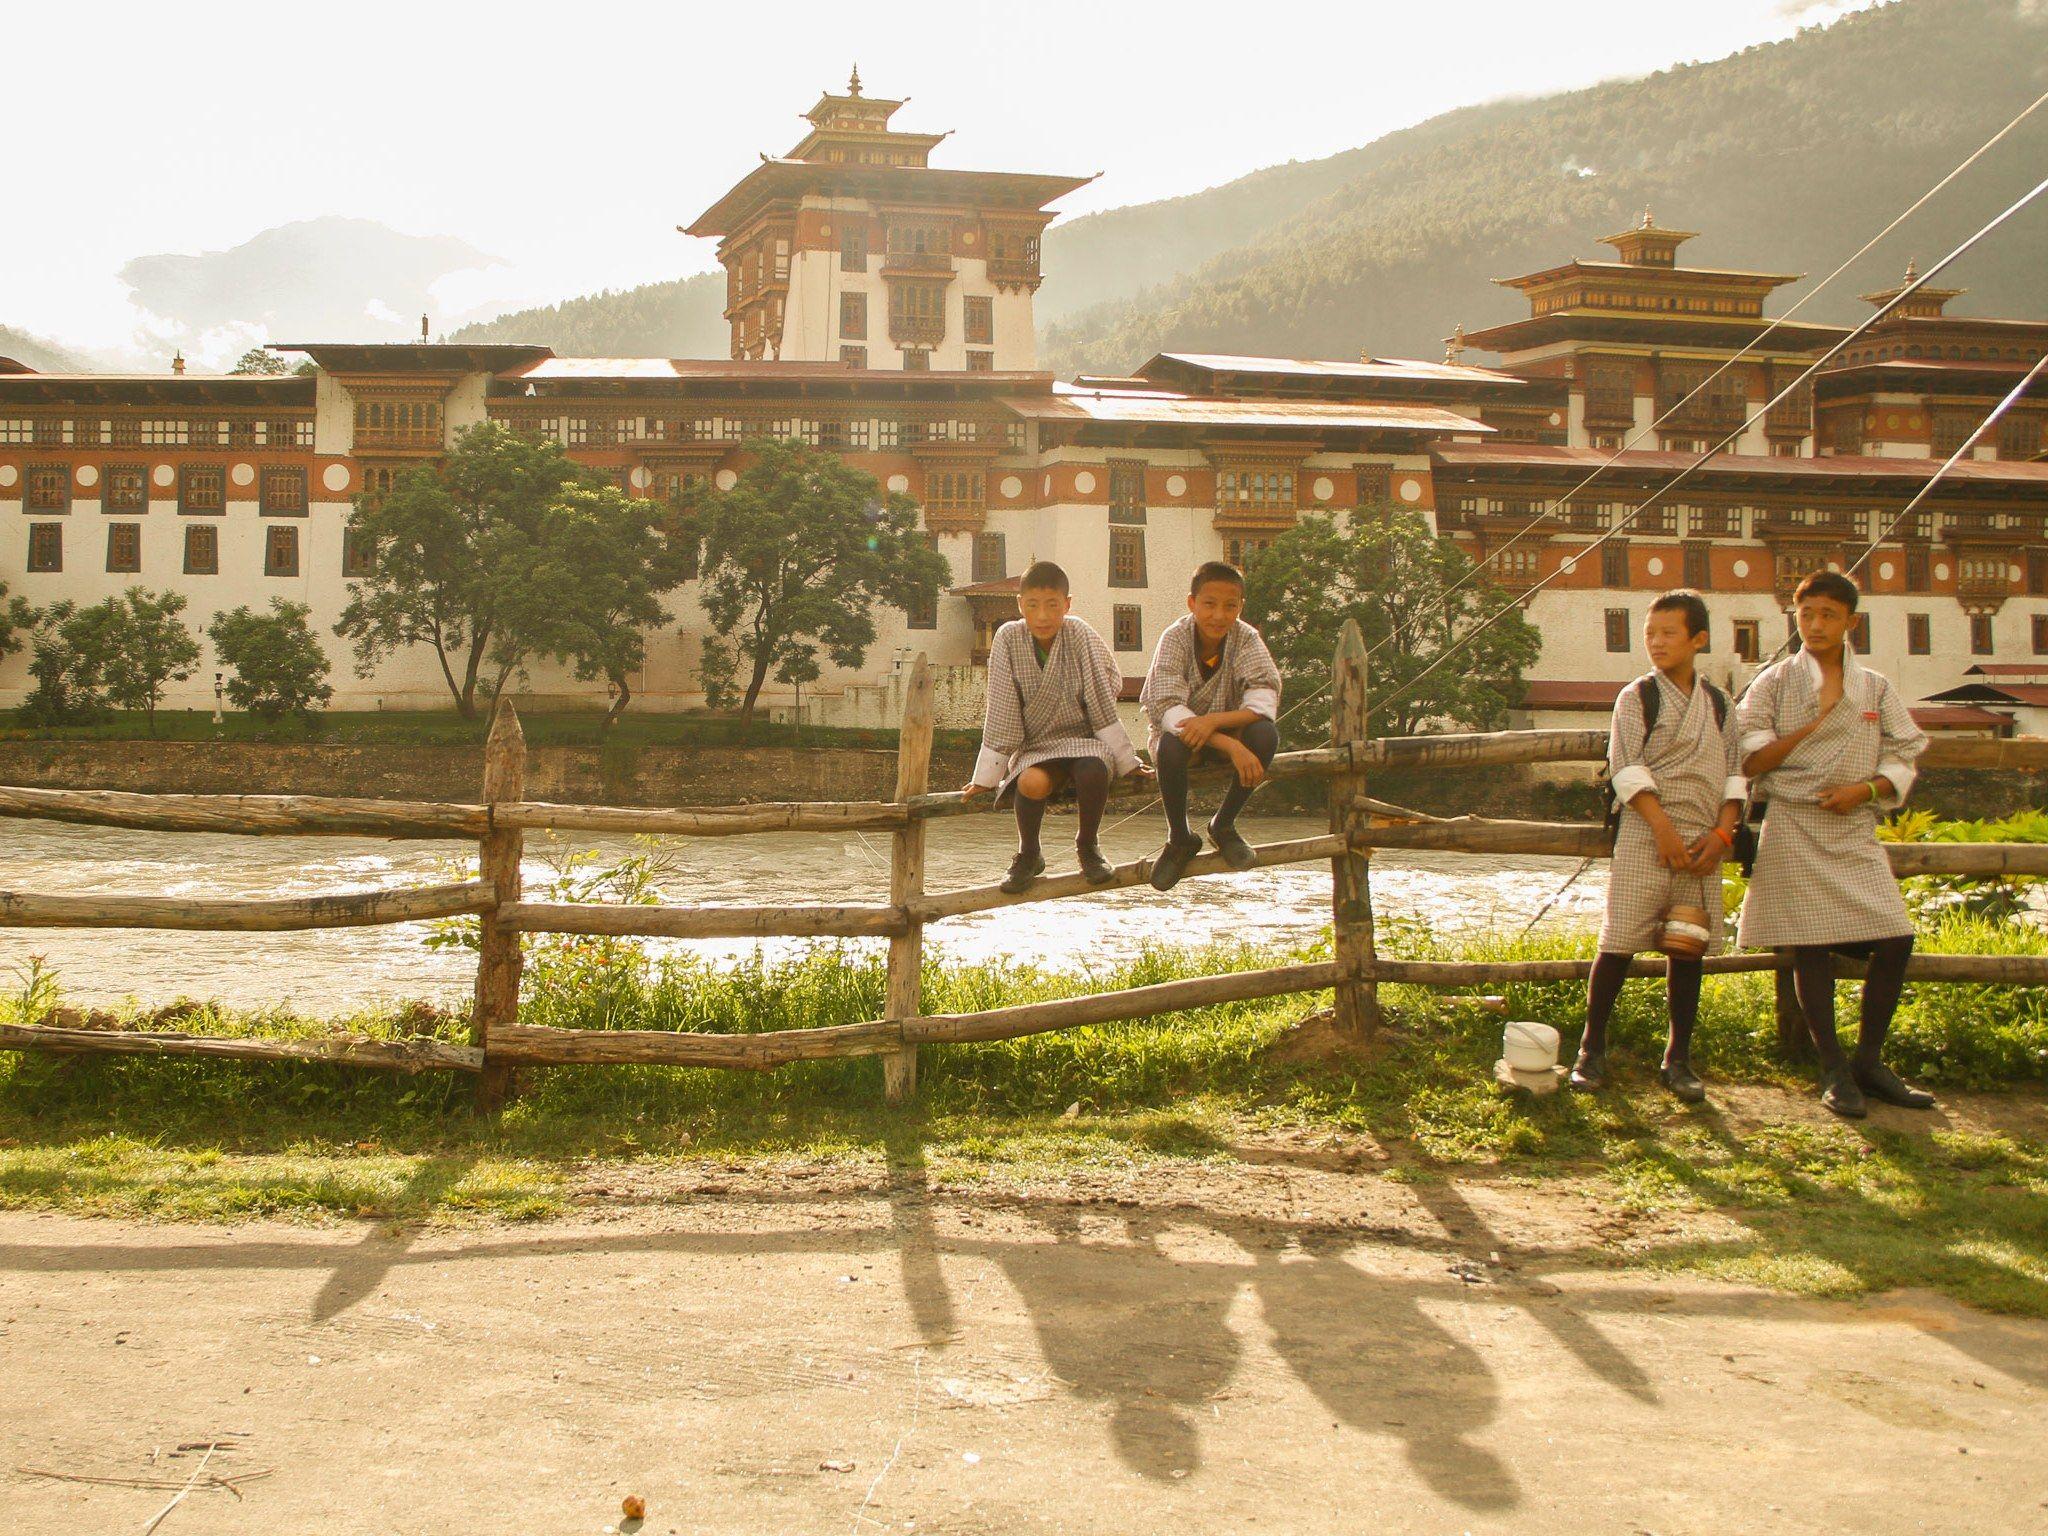 Beautiful Image of Bhutan, the World's Happiest Country